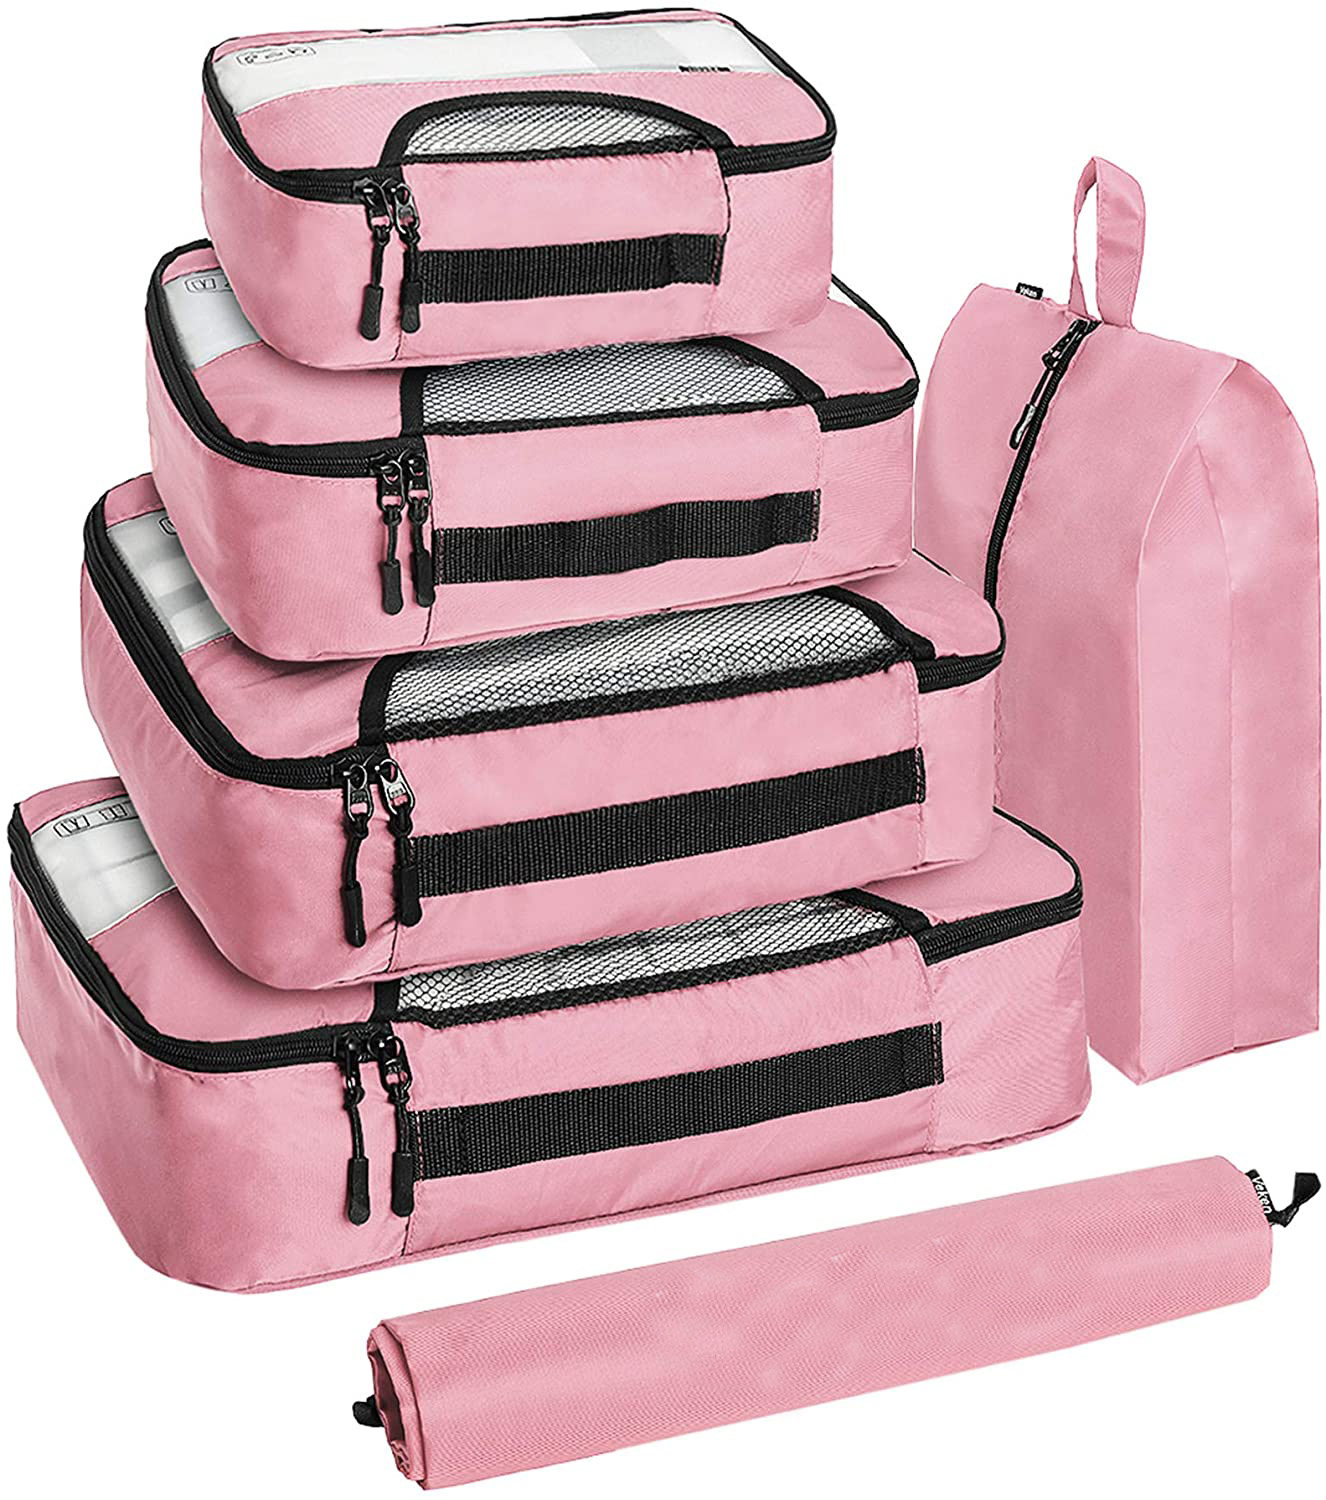 6 Set Packing Cube Luggage Travel Packing Organizer Fashion